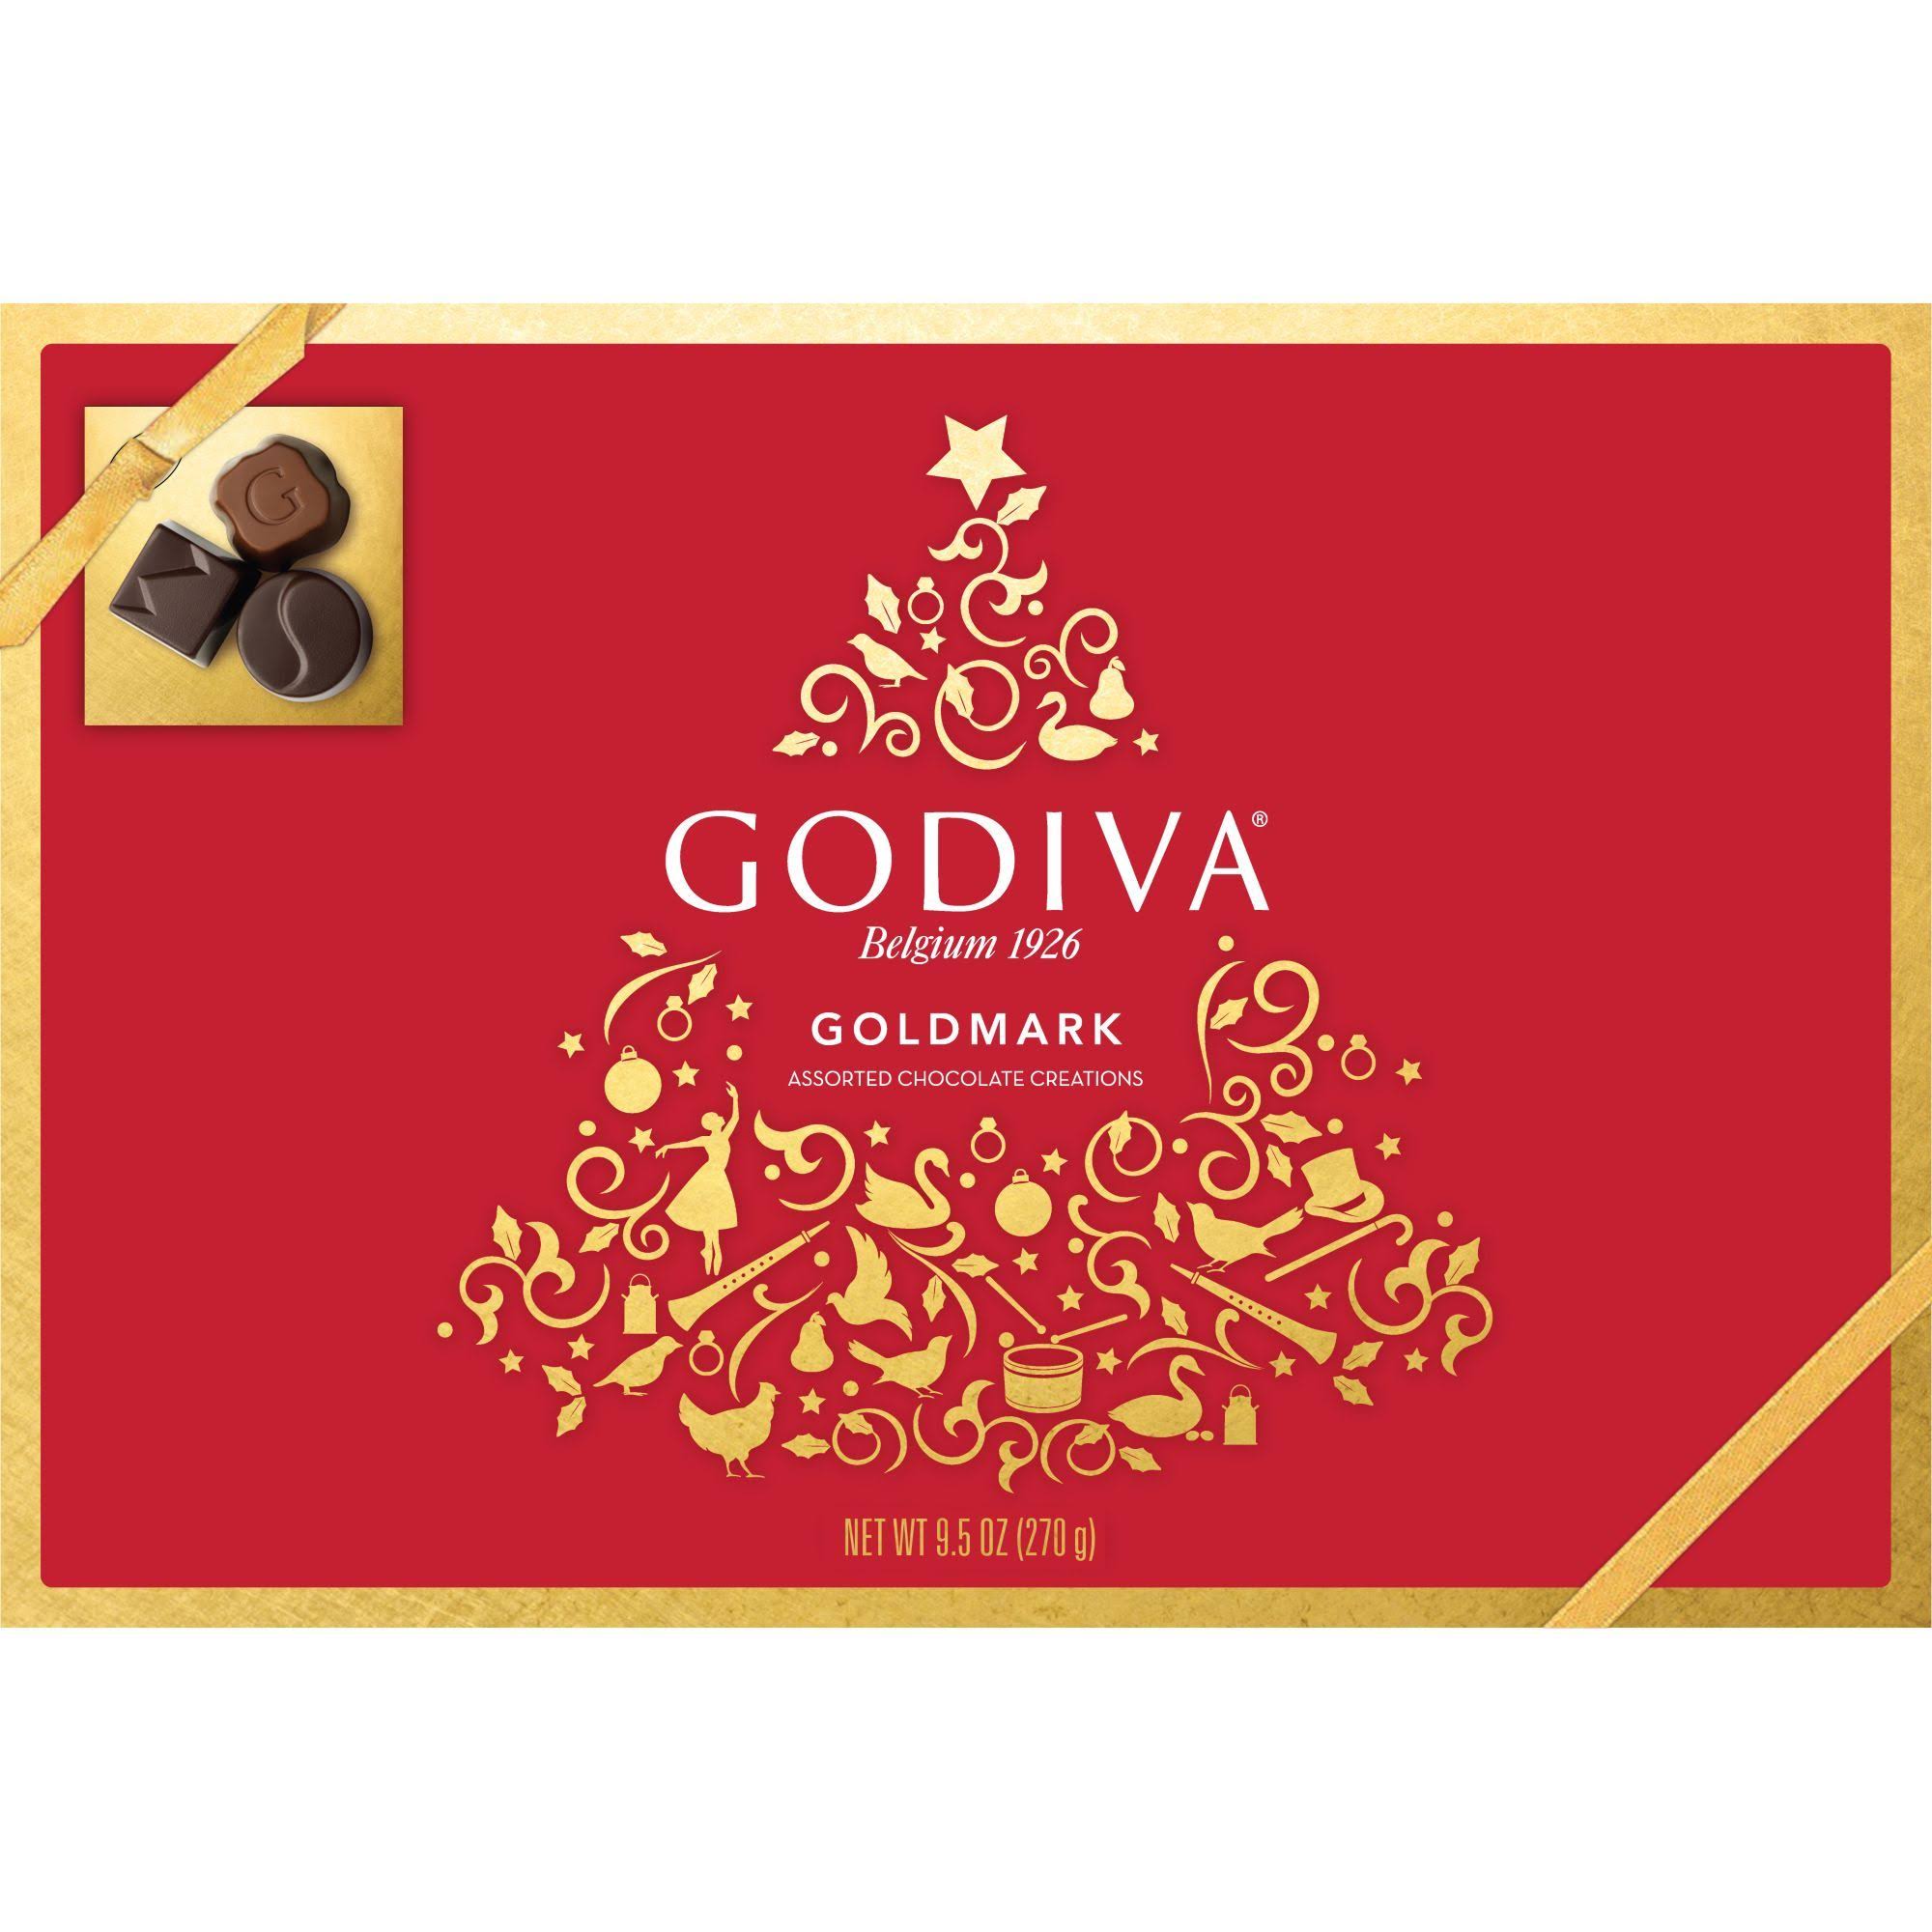 Godiva Goldmark Assorted Chocolates - 22 ct